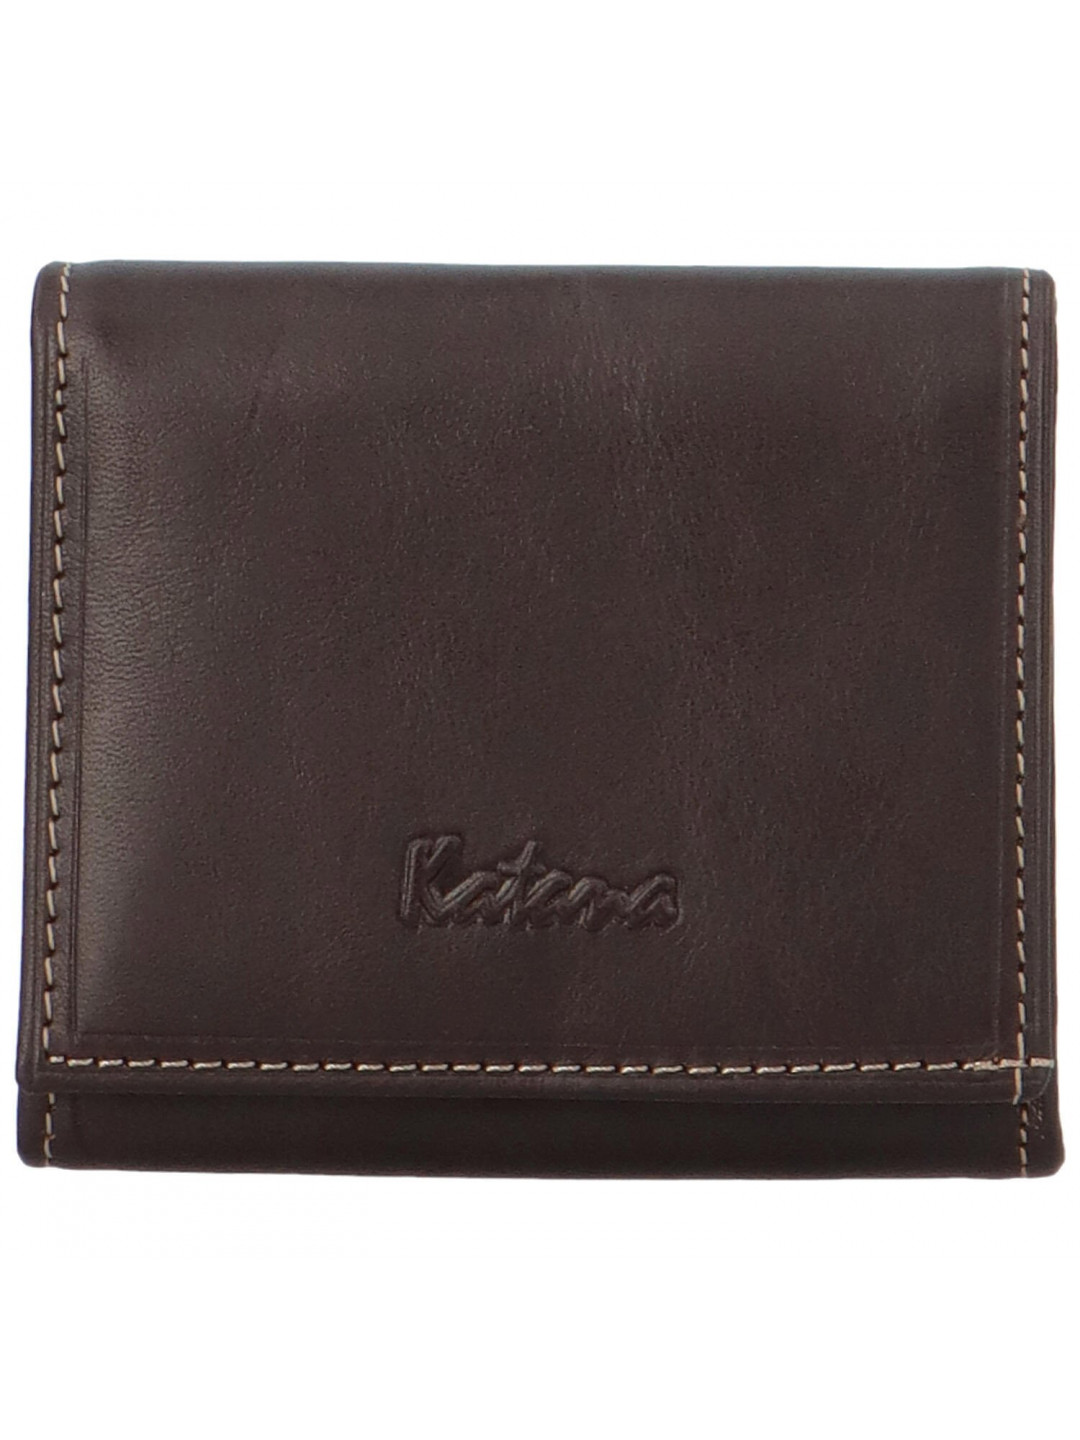 Dámská kožená peněženka tmavě hnědá – Katana Triwia